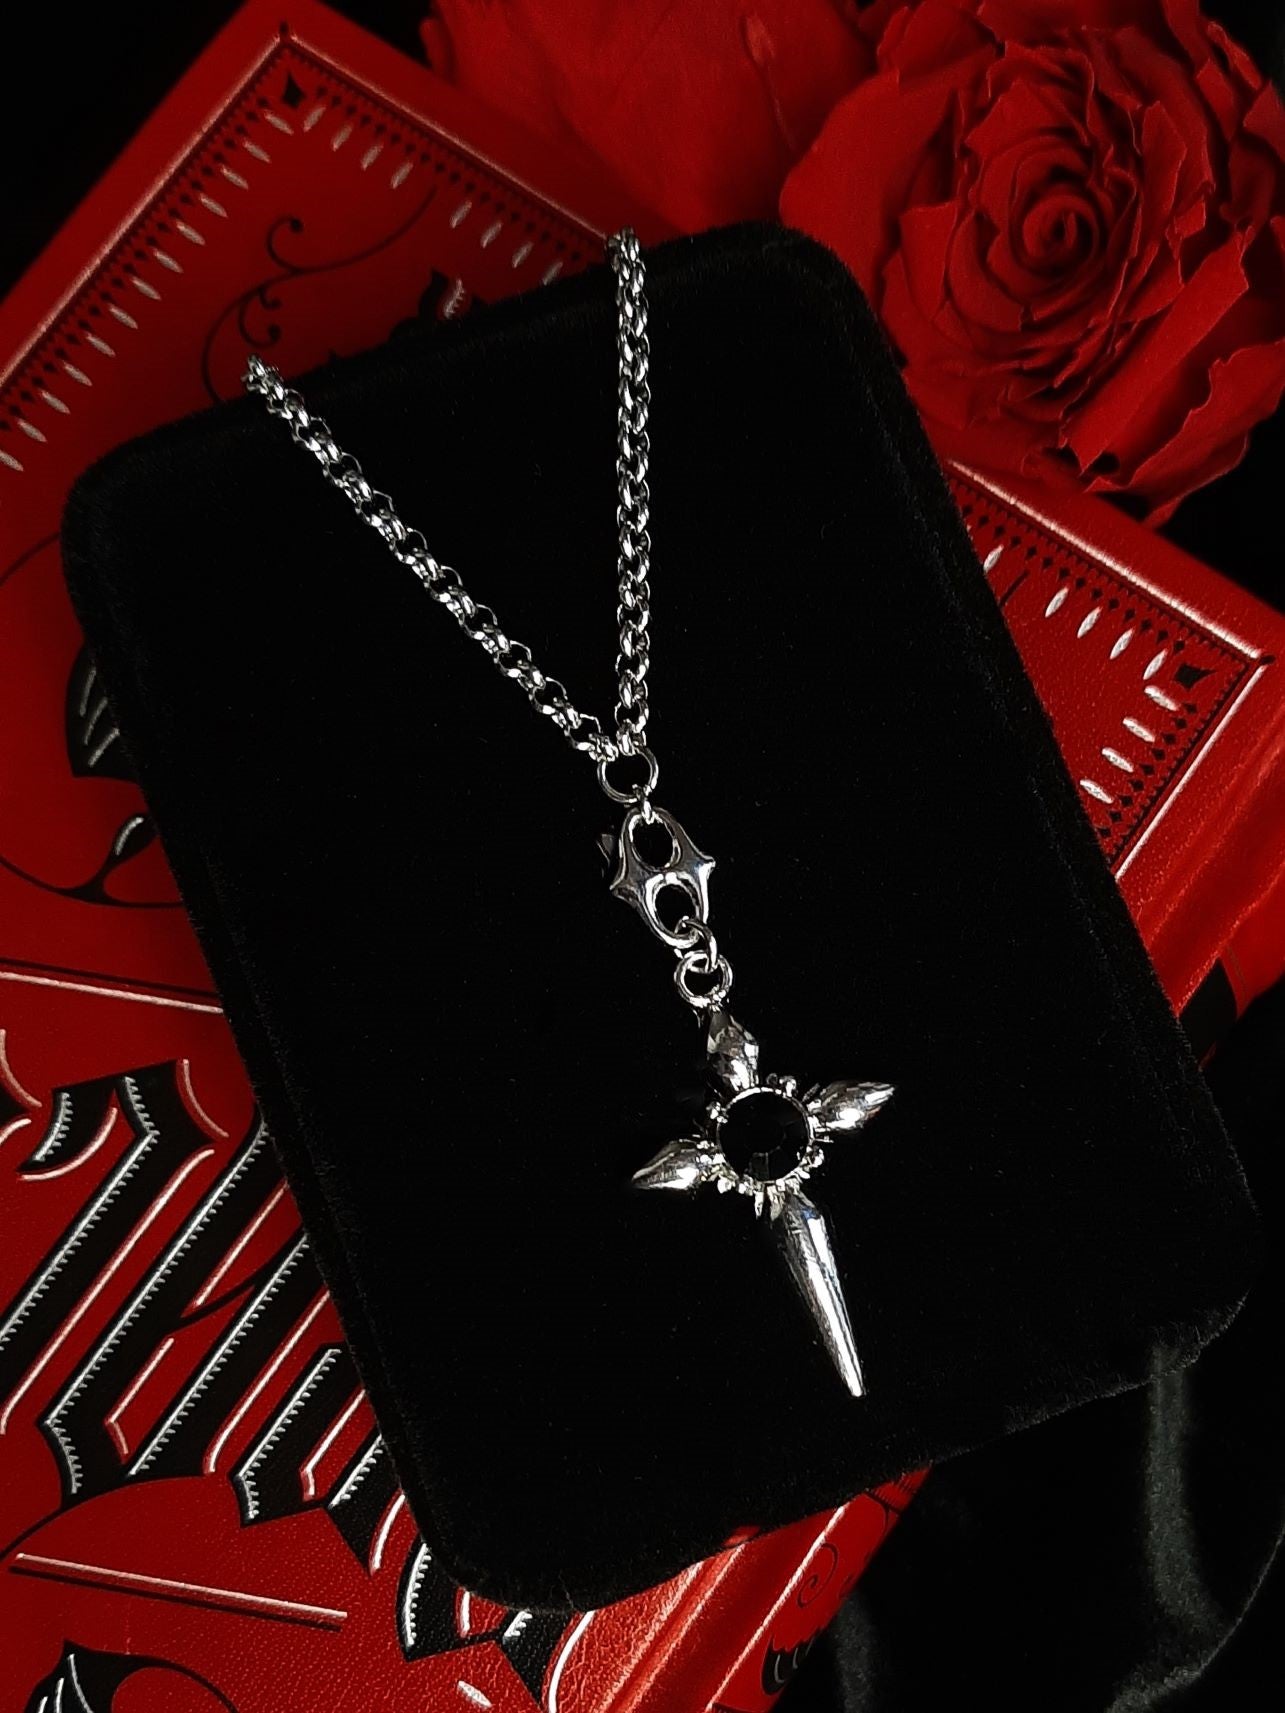 𝕮𝖔𝖒𝖒𝖆𝖓𝖉 cross necklace - 𝕺𝖓𝖊 𝖑𝖊𝖋𝖙 !